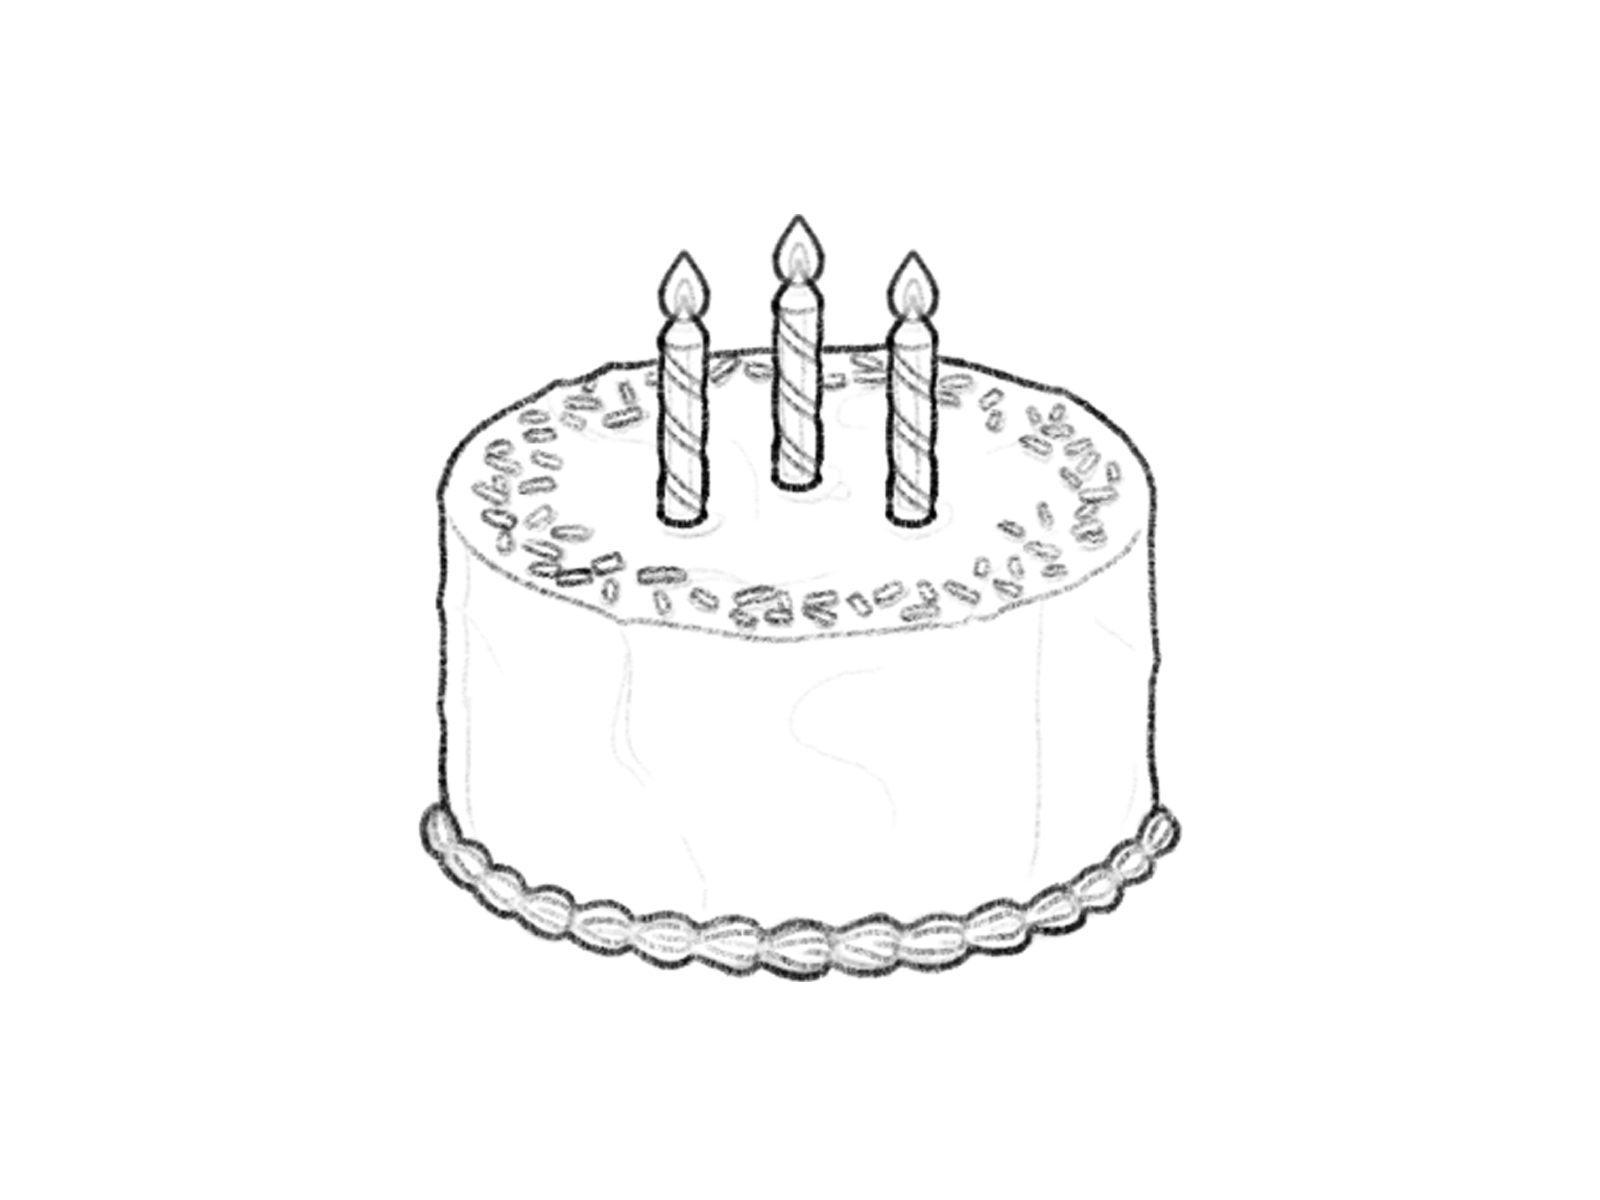 Birthday Cake Sketch by Brandon Link on Dribbble